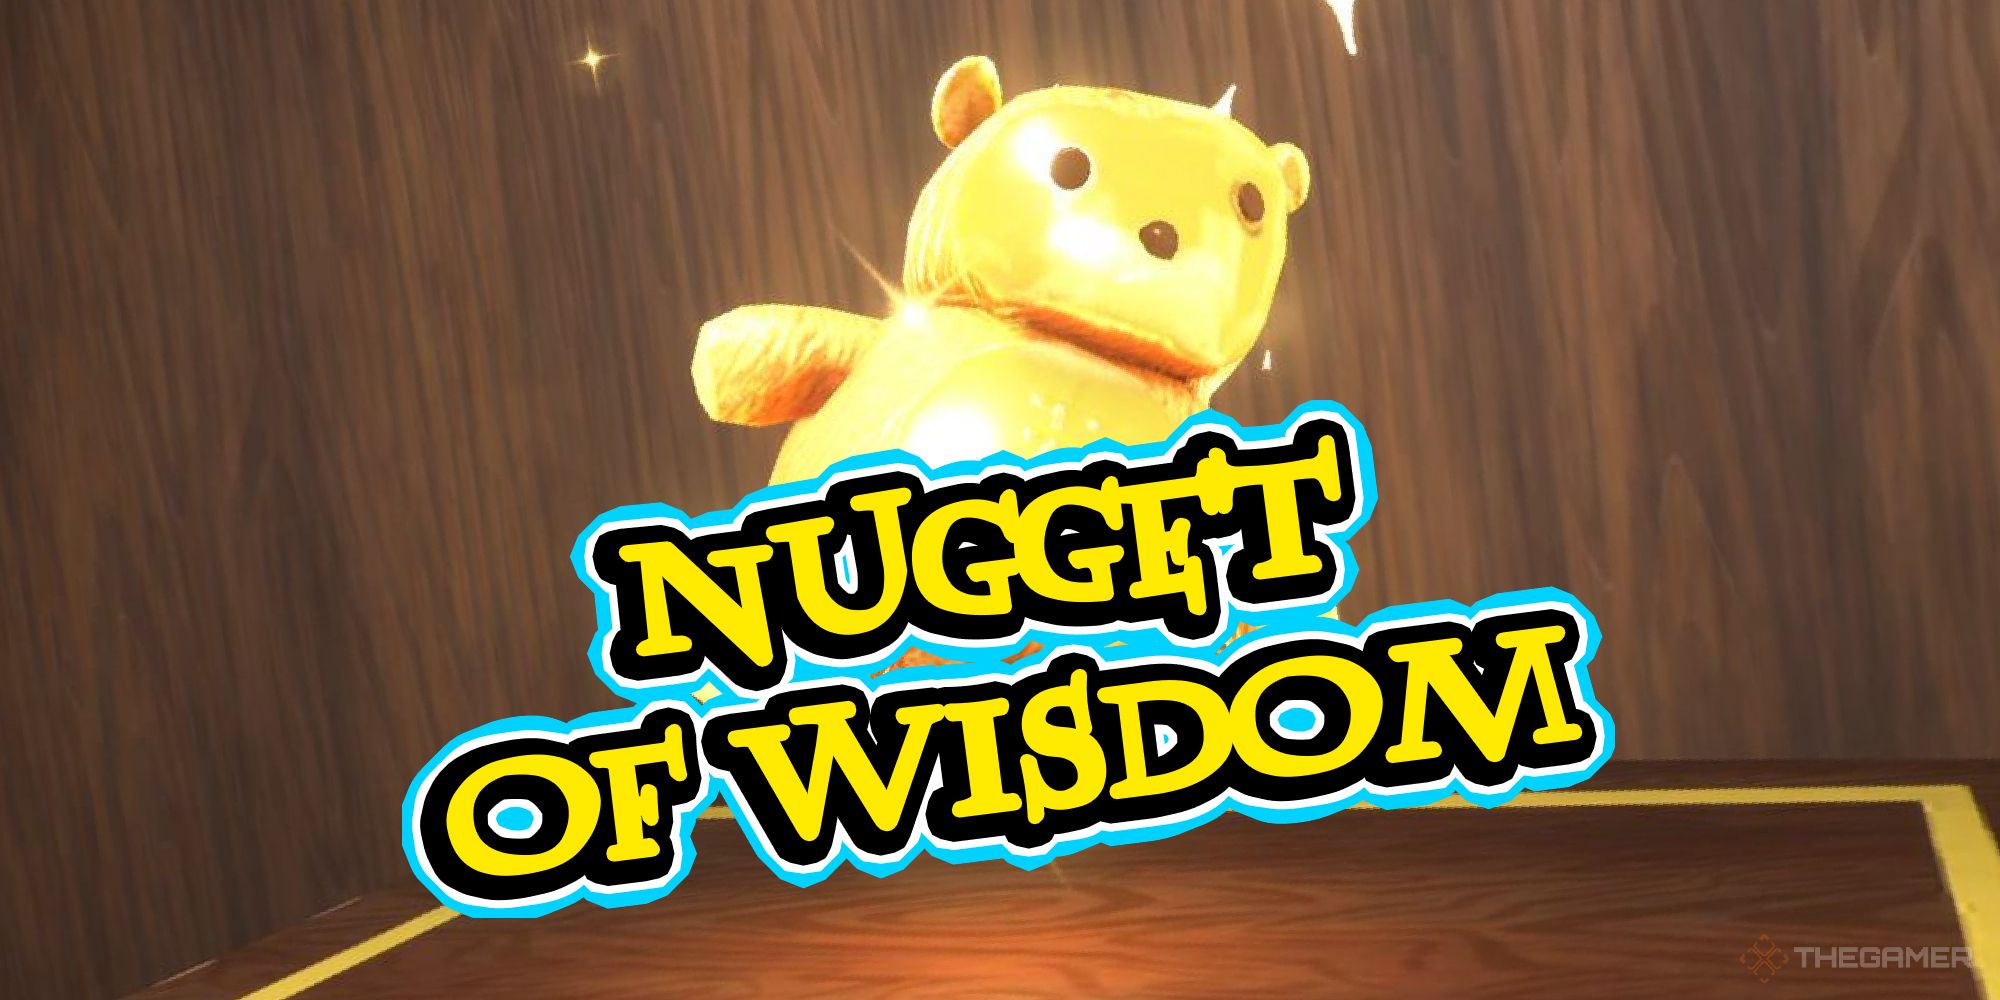 Nugget of Wisdom